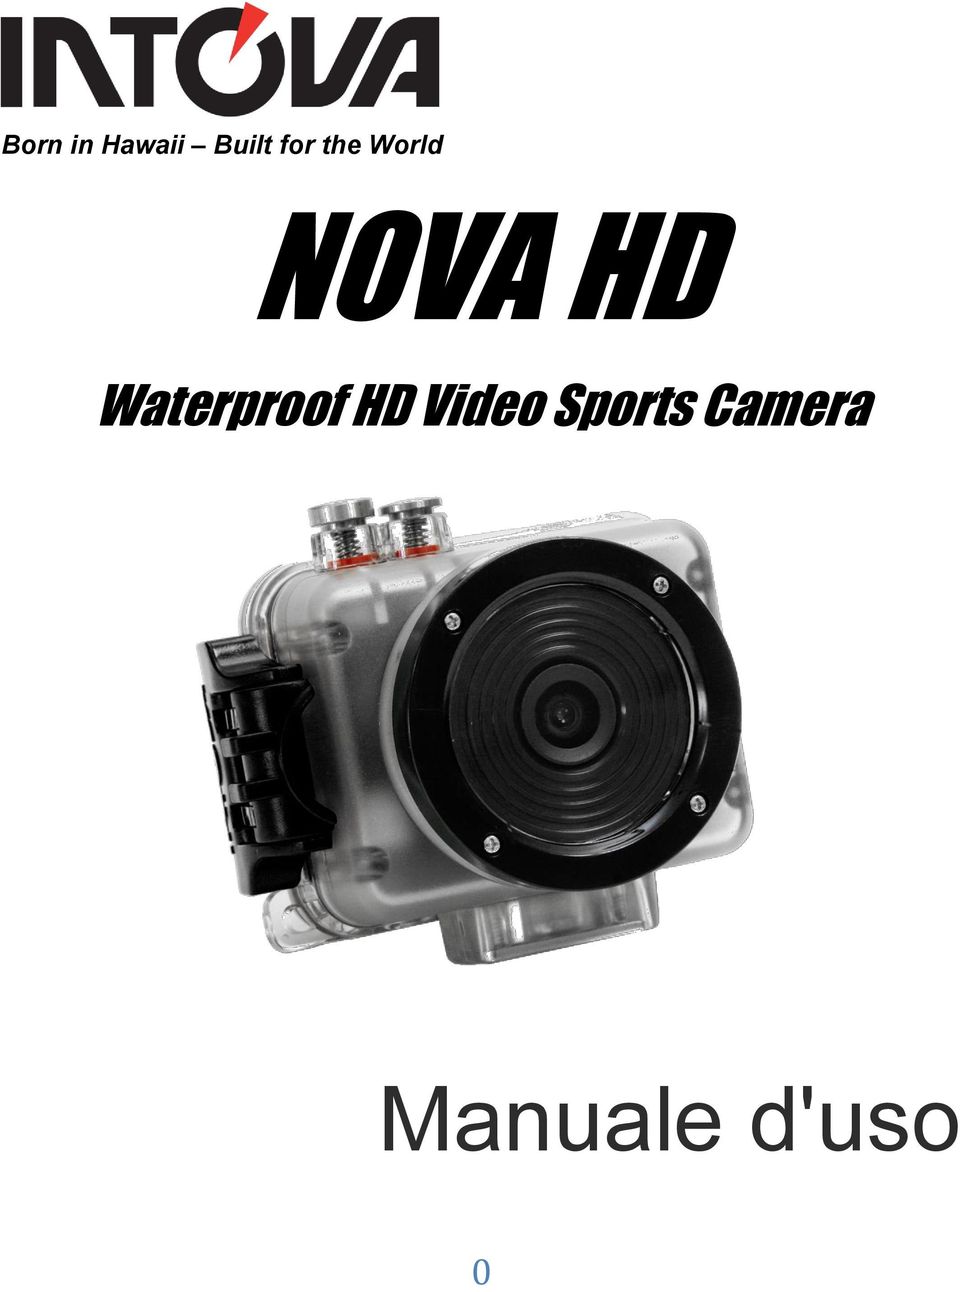 Waterproof HD Video